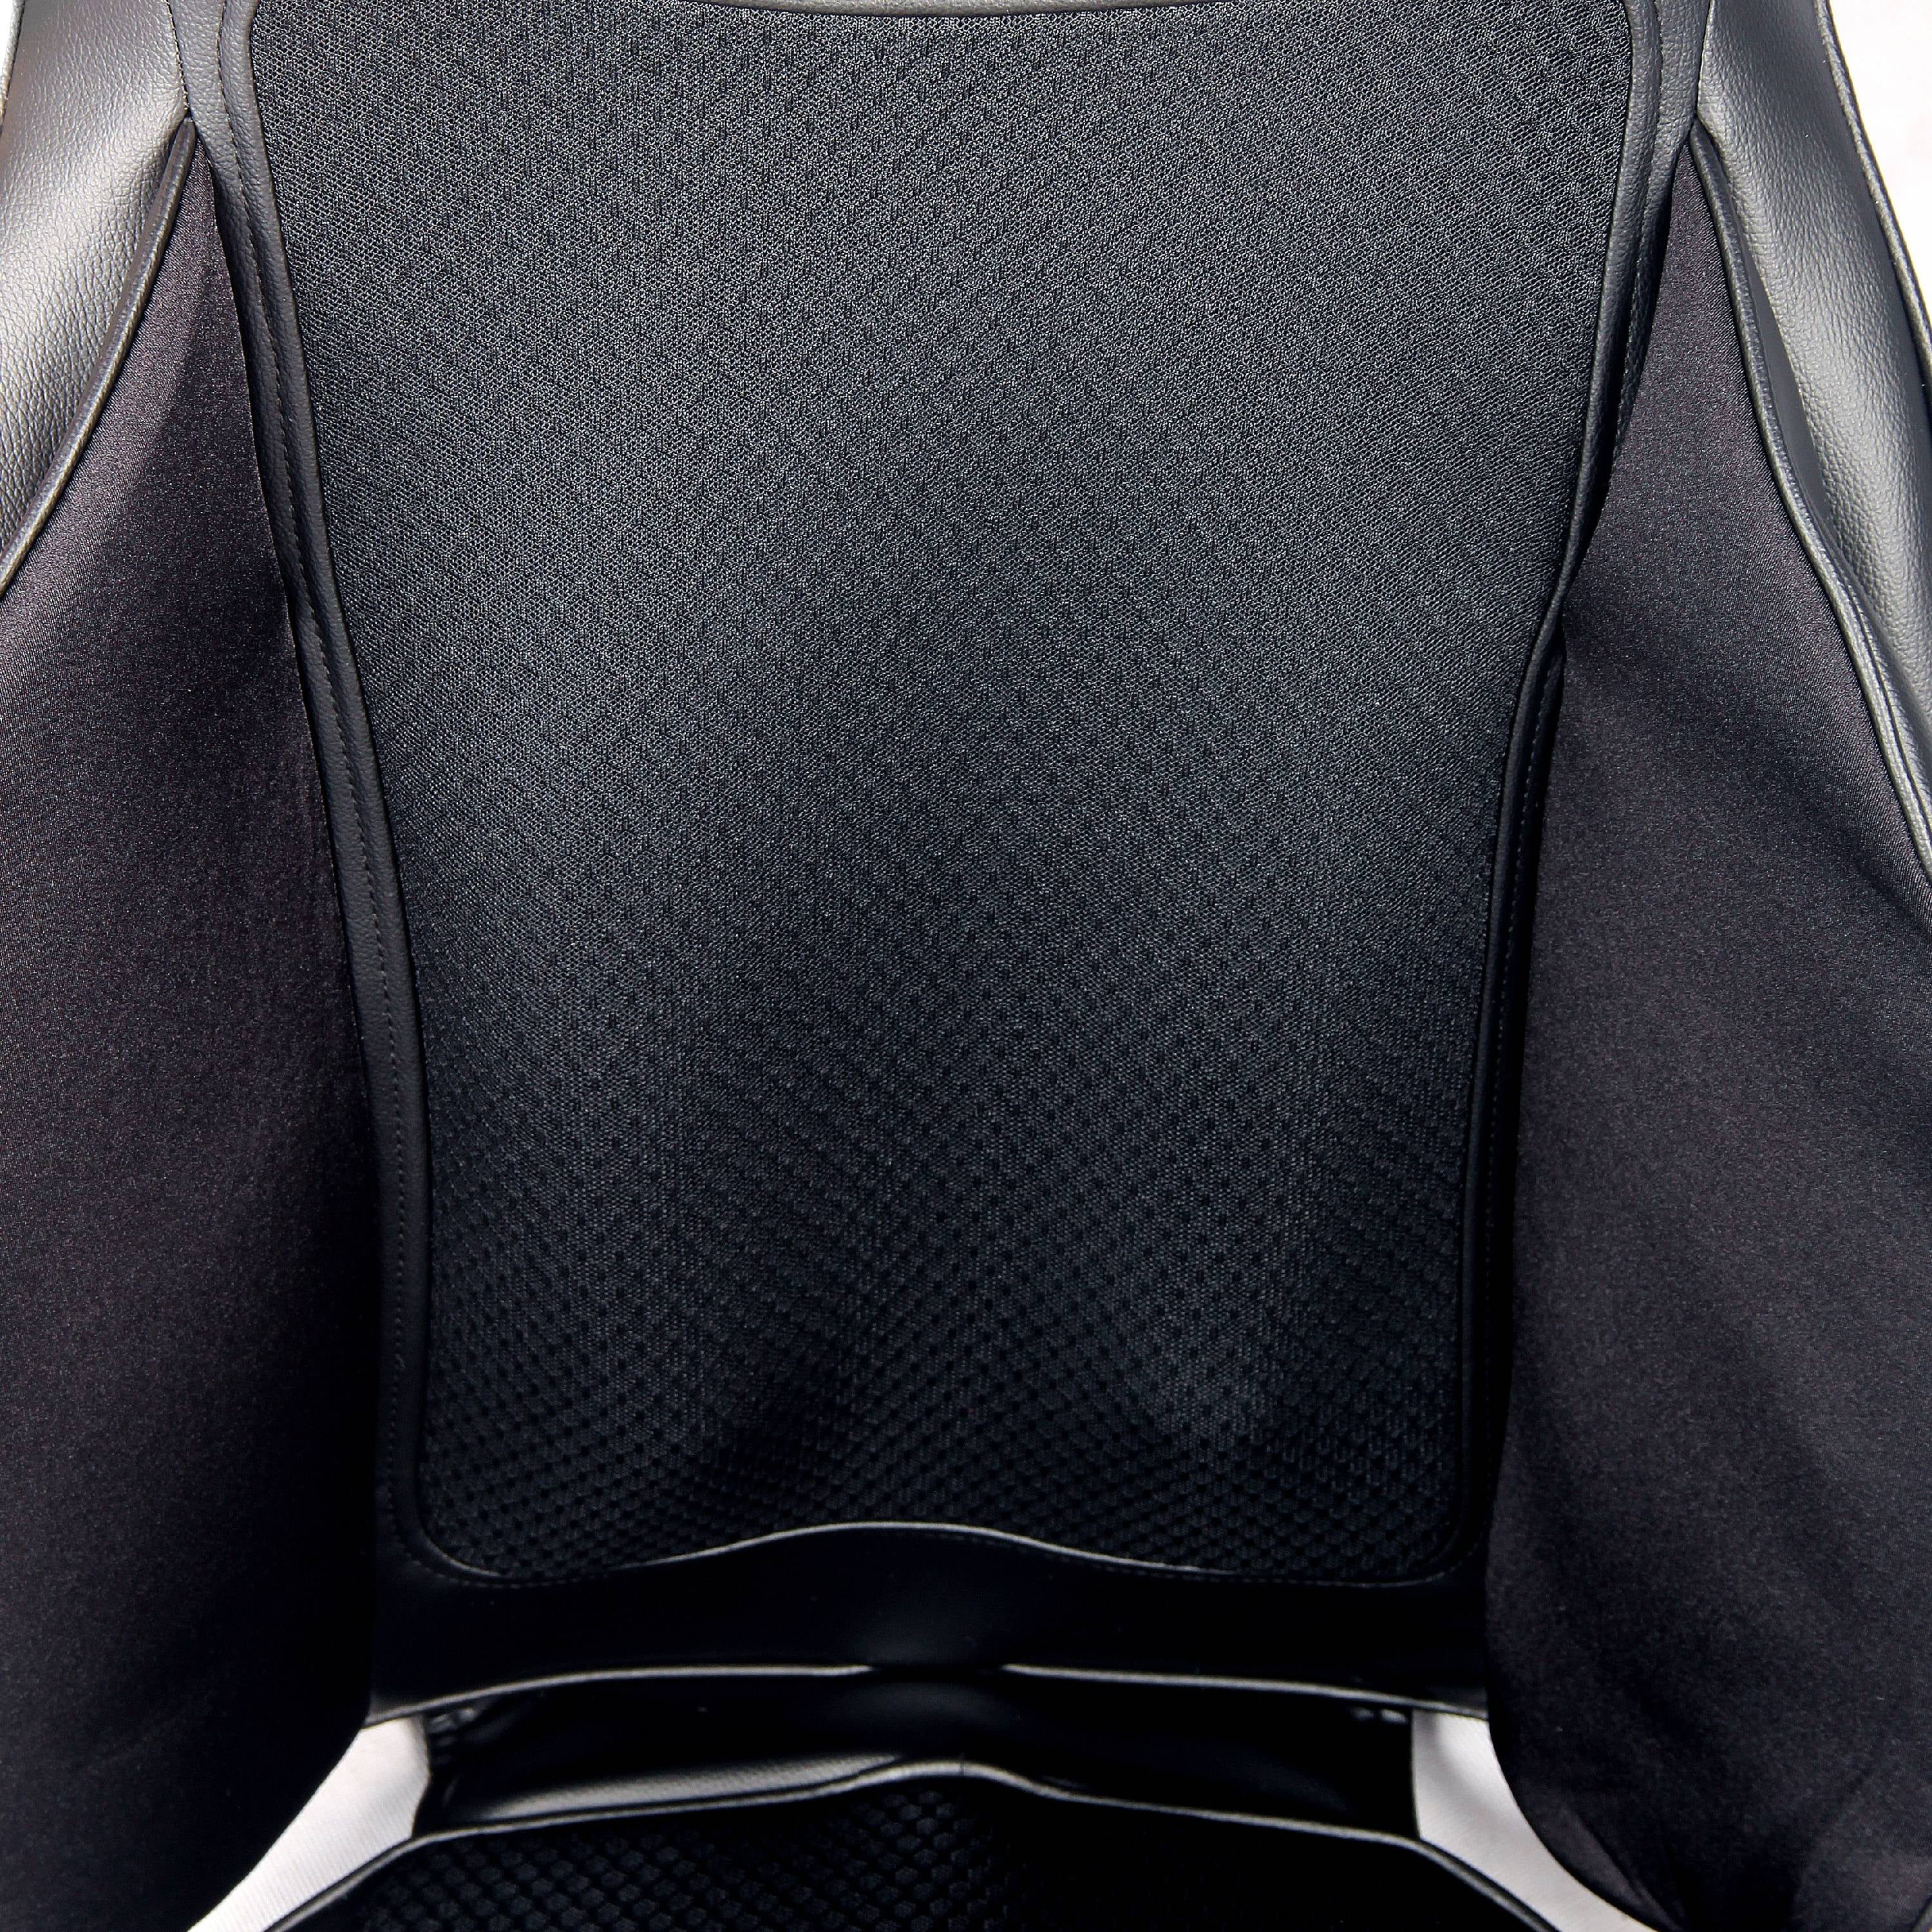 Aurora Shiatsu Massage Seat Cushion/Topper w/Air Compression Technology and  Heat 